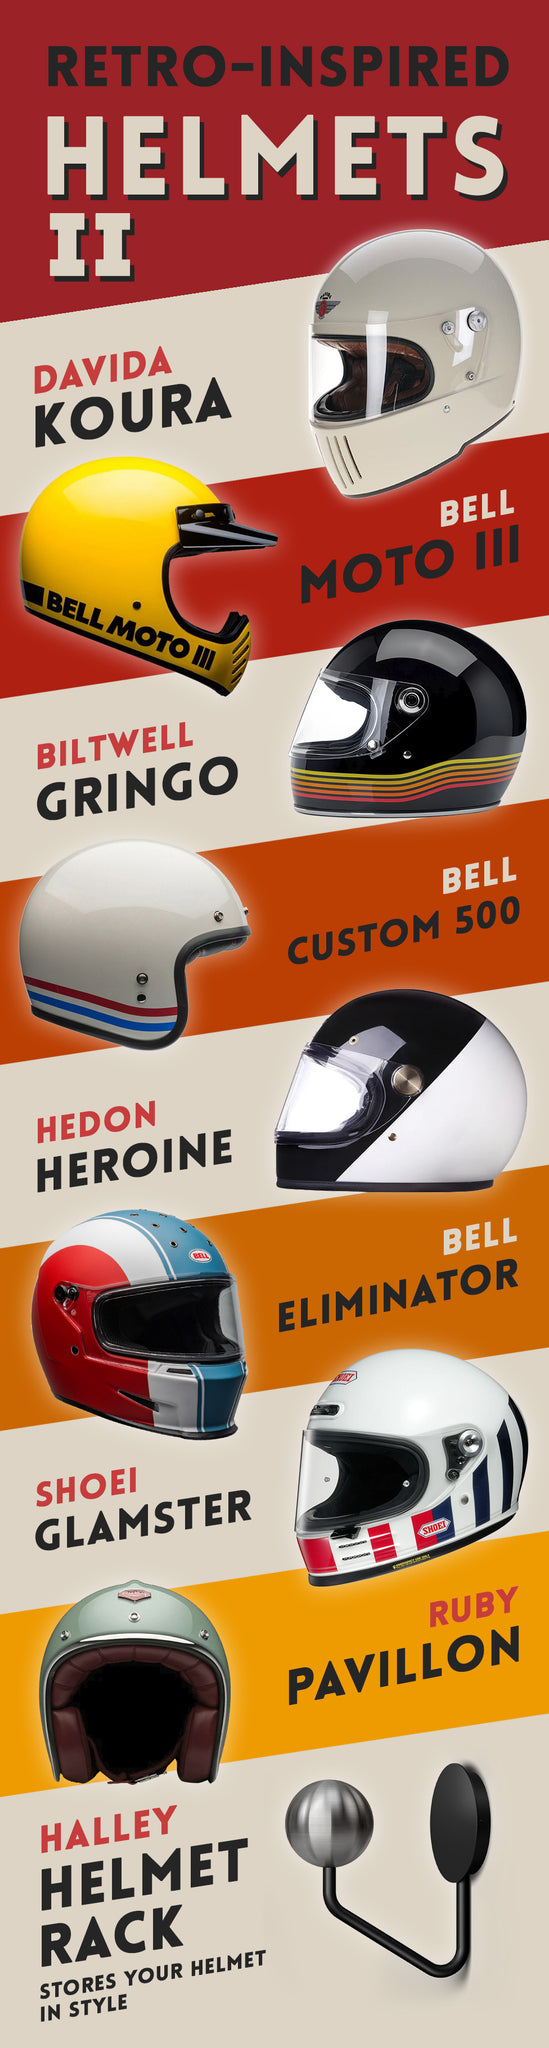 Retro-inspired Helmets